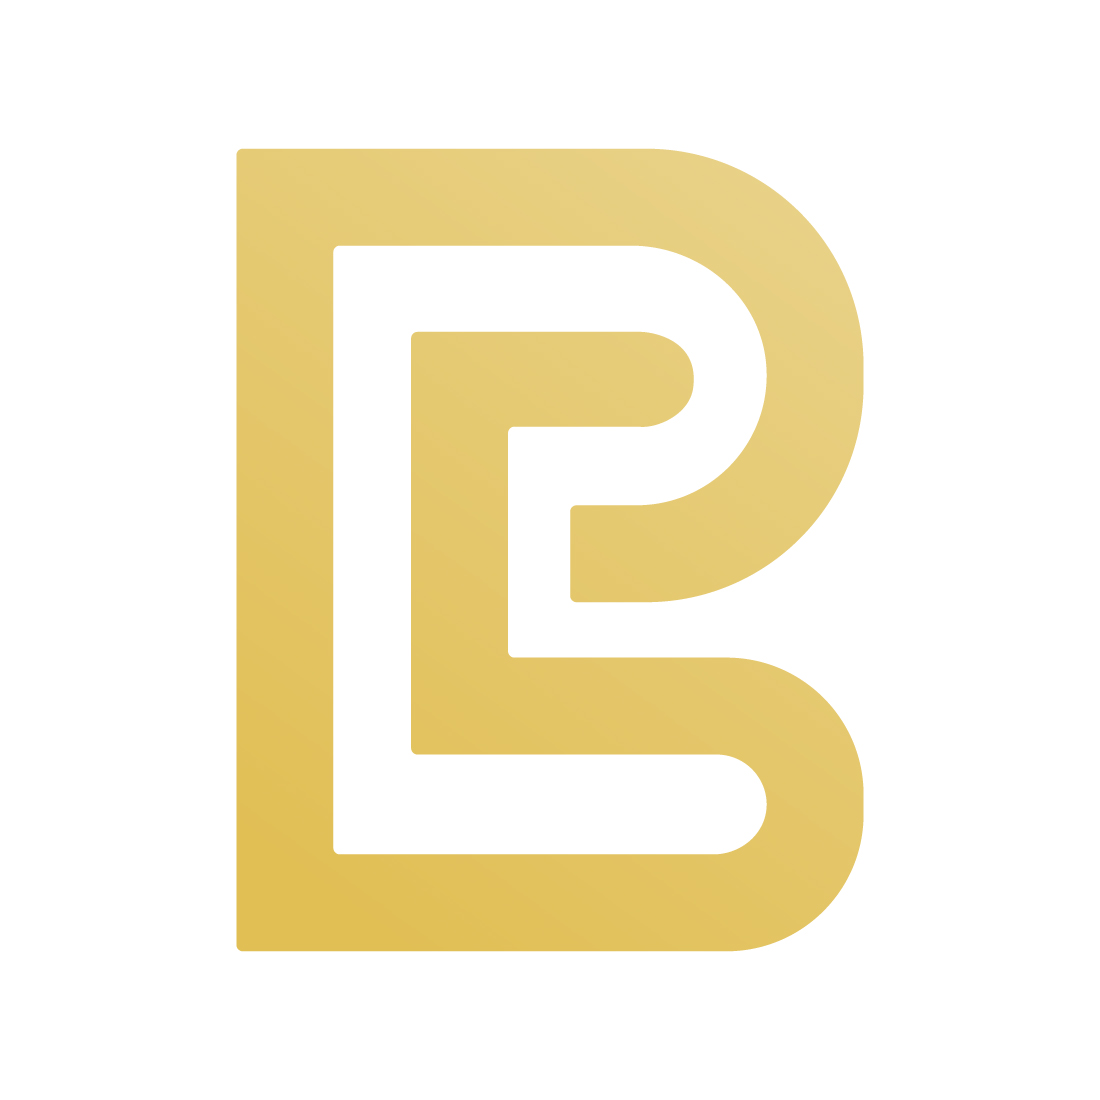 Luxury B letters logo design vector images B Golden color logo best company royalty BP logo monogram best brand icon design preview image.